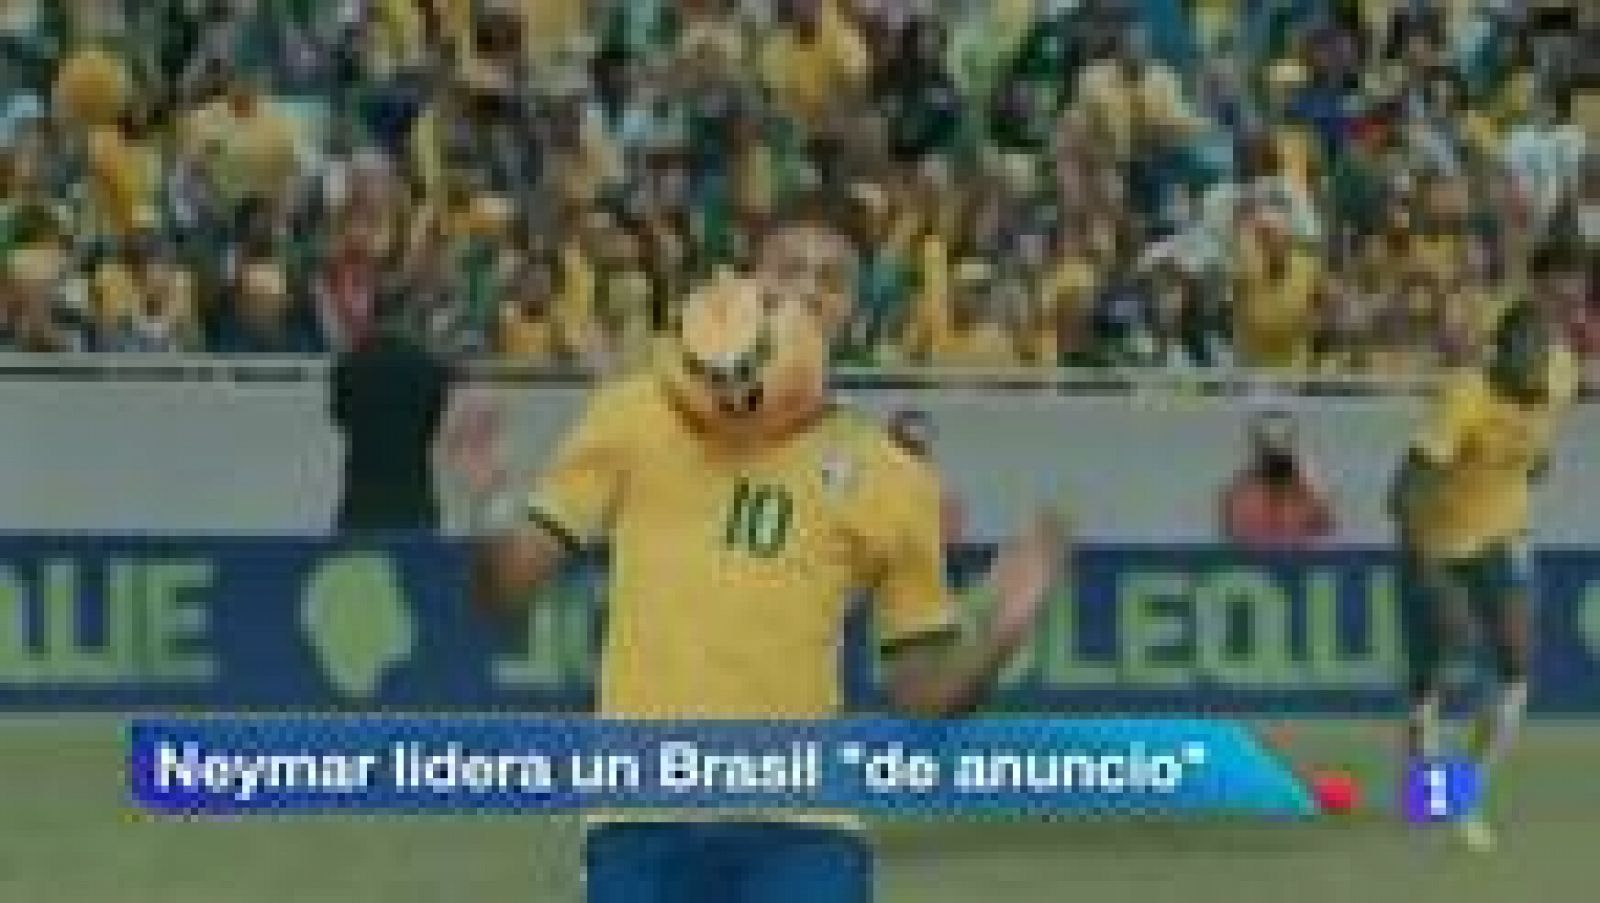 Telediario 1: Neymar lidera un Brasil de anuncio | RTVE Play